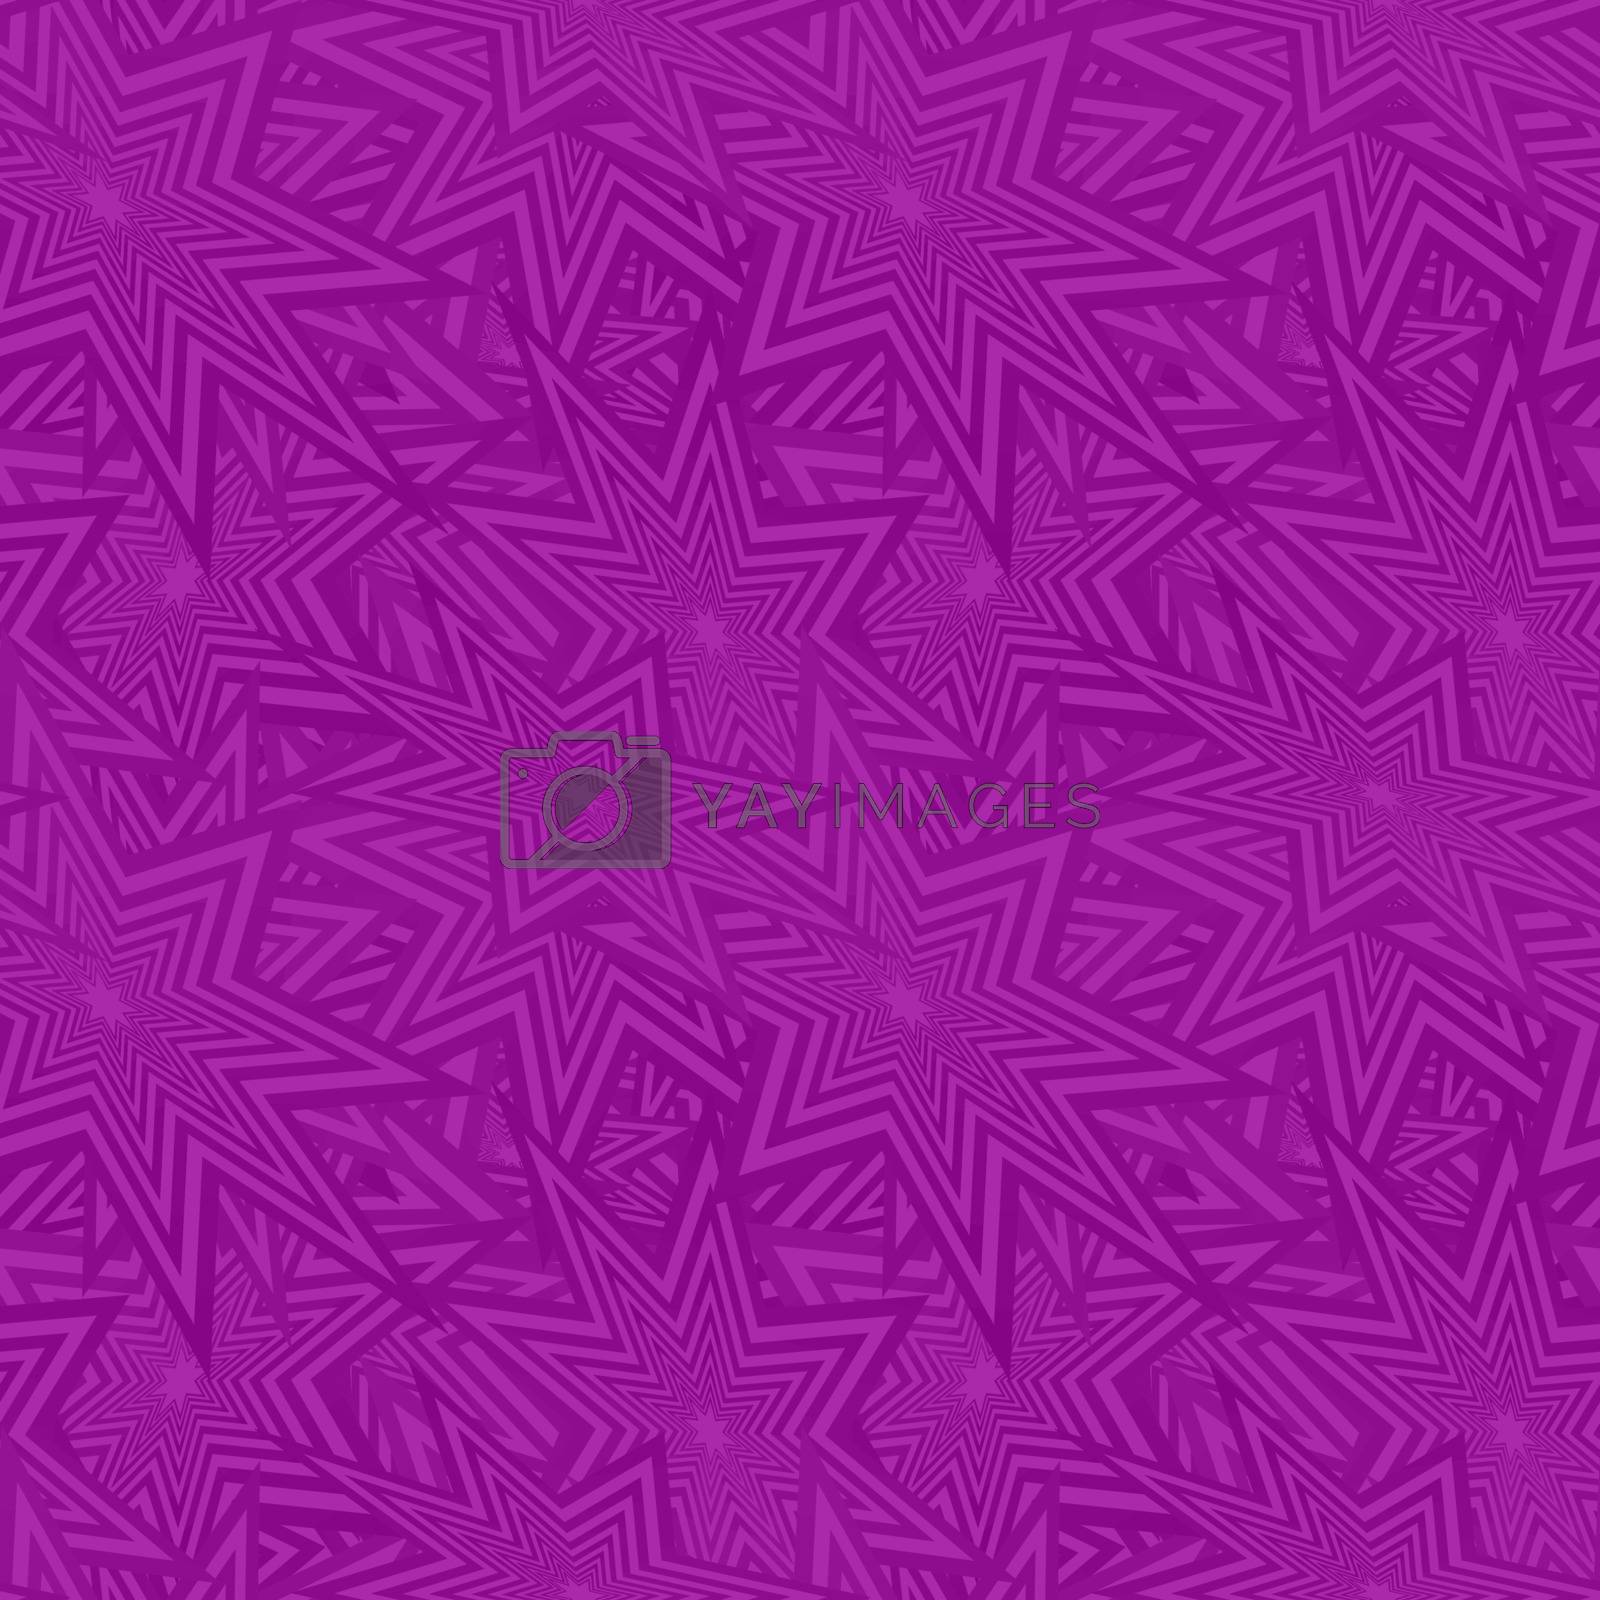 Royalty free image of Purple seamless star pattern background by davidzydd